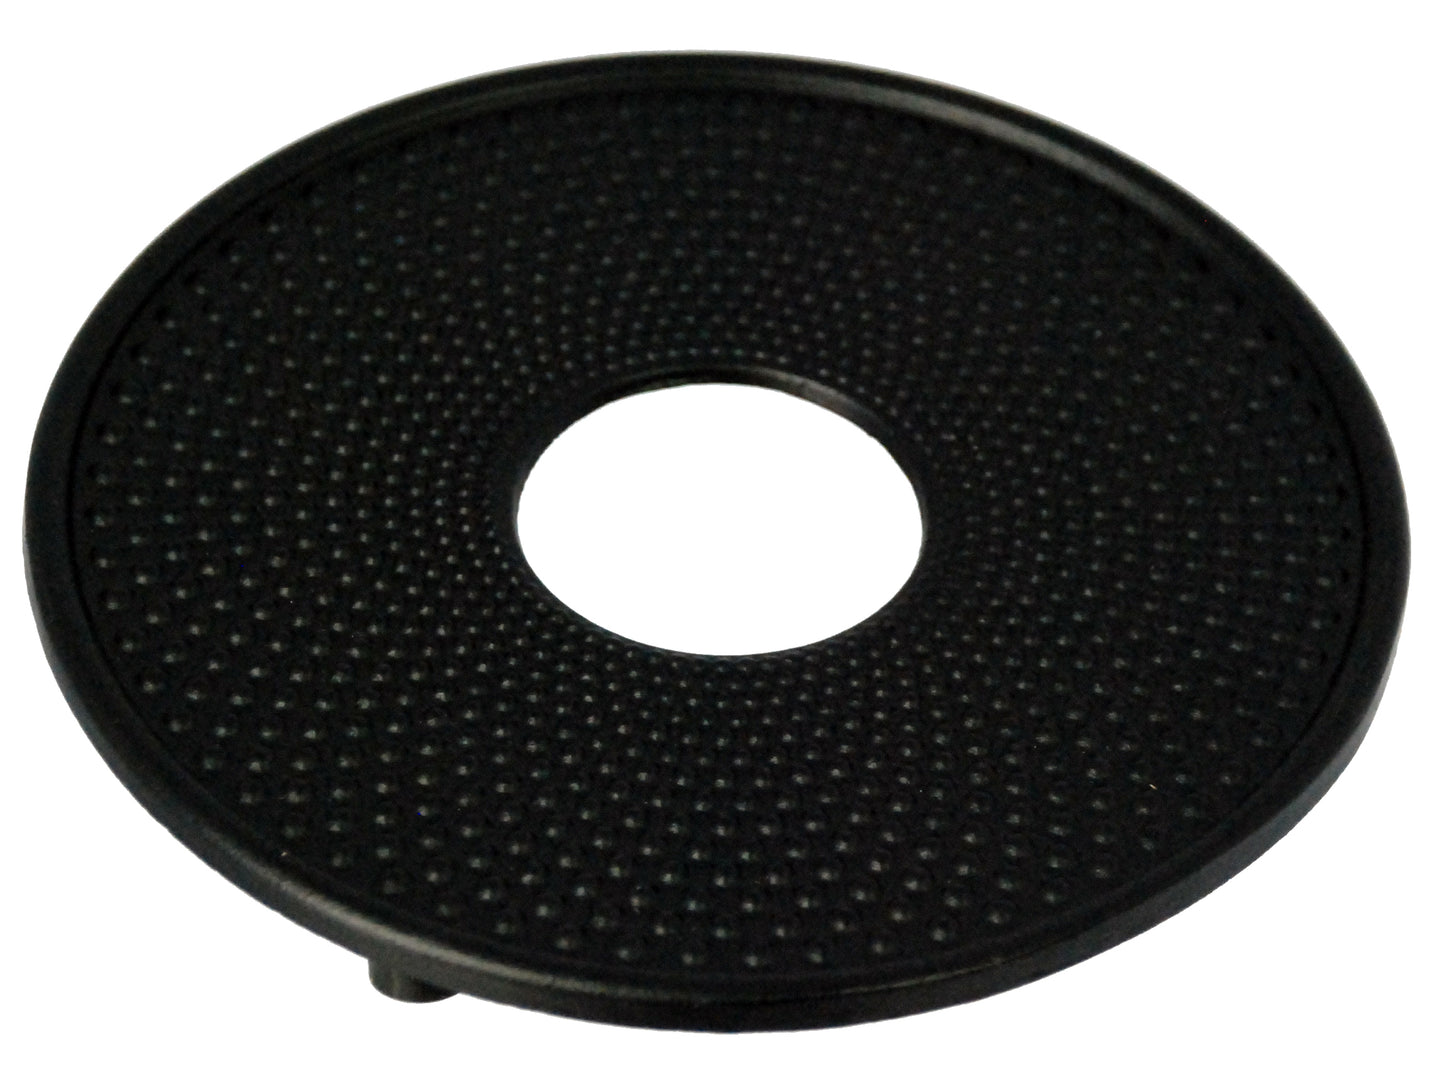 Buckingham Japanese Style Cast Iron Trivet Hot Plate Pot Stand Worktop Protector, 14 cm, Black, Hobnail